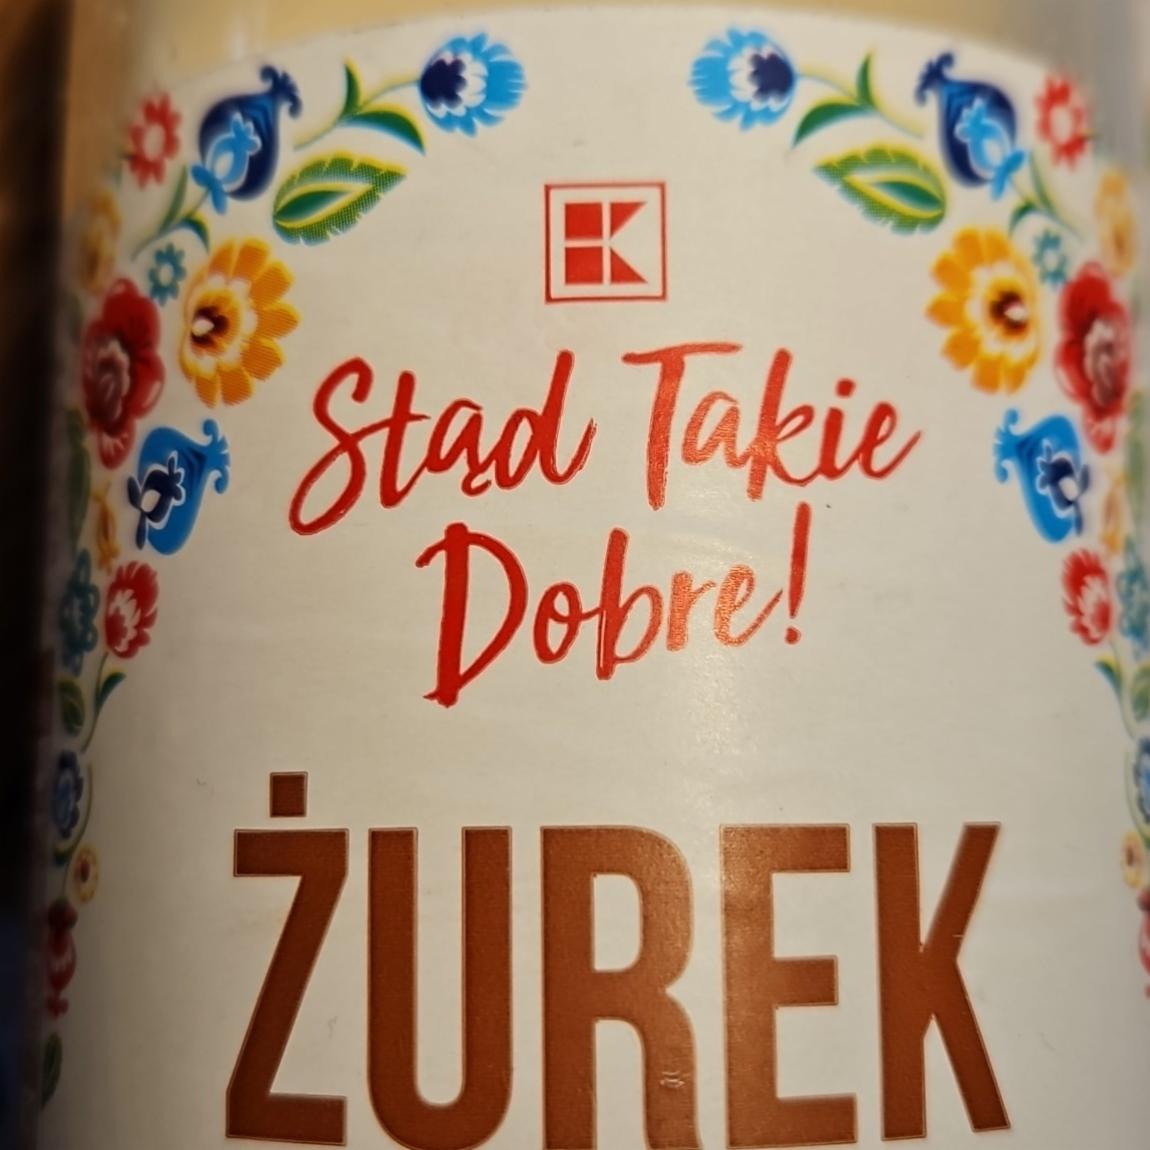 Fotografie - ŻUREK SkądTakieDobre